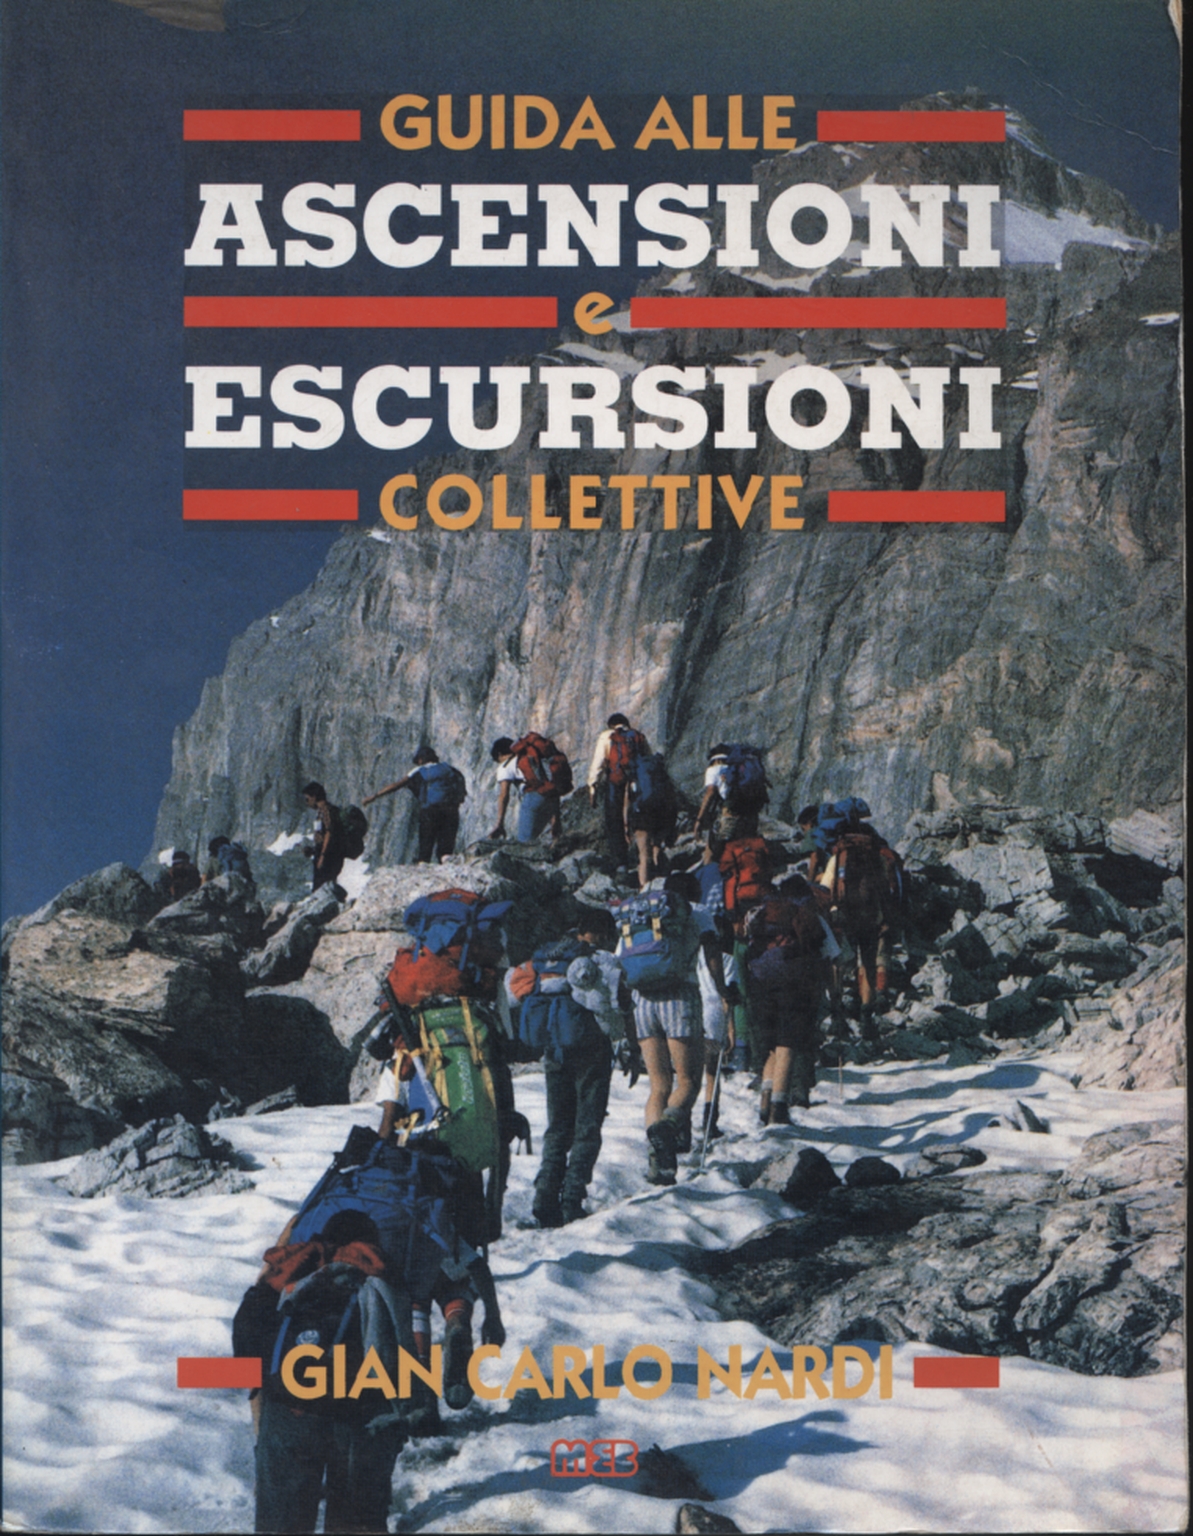 Guide de l'escalade et de la randonnée collective, Gian Carlo Nardi